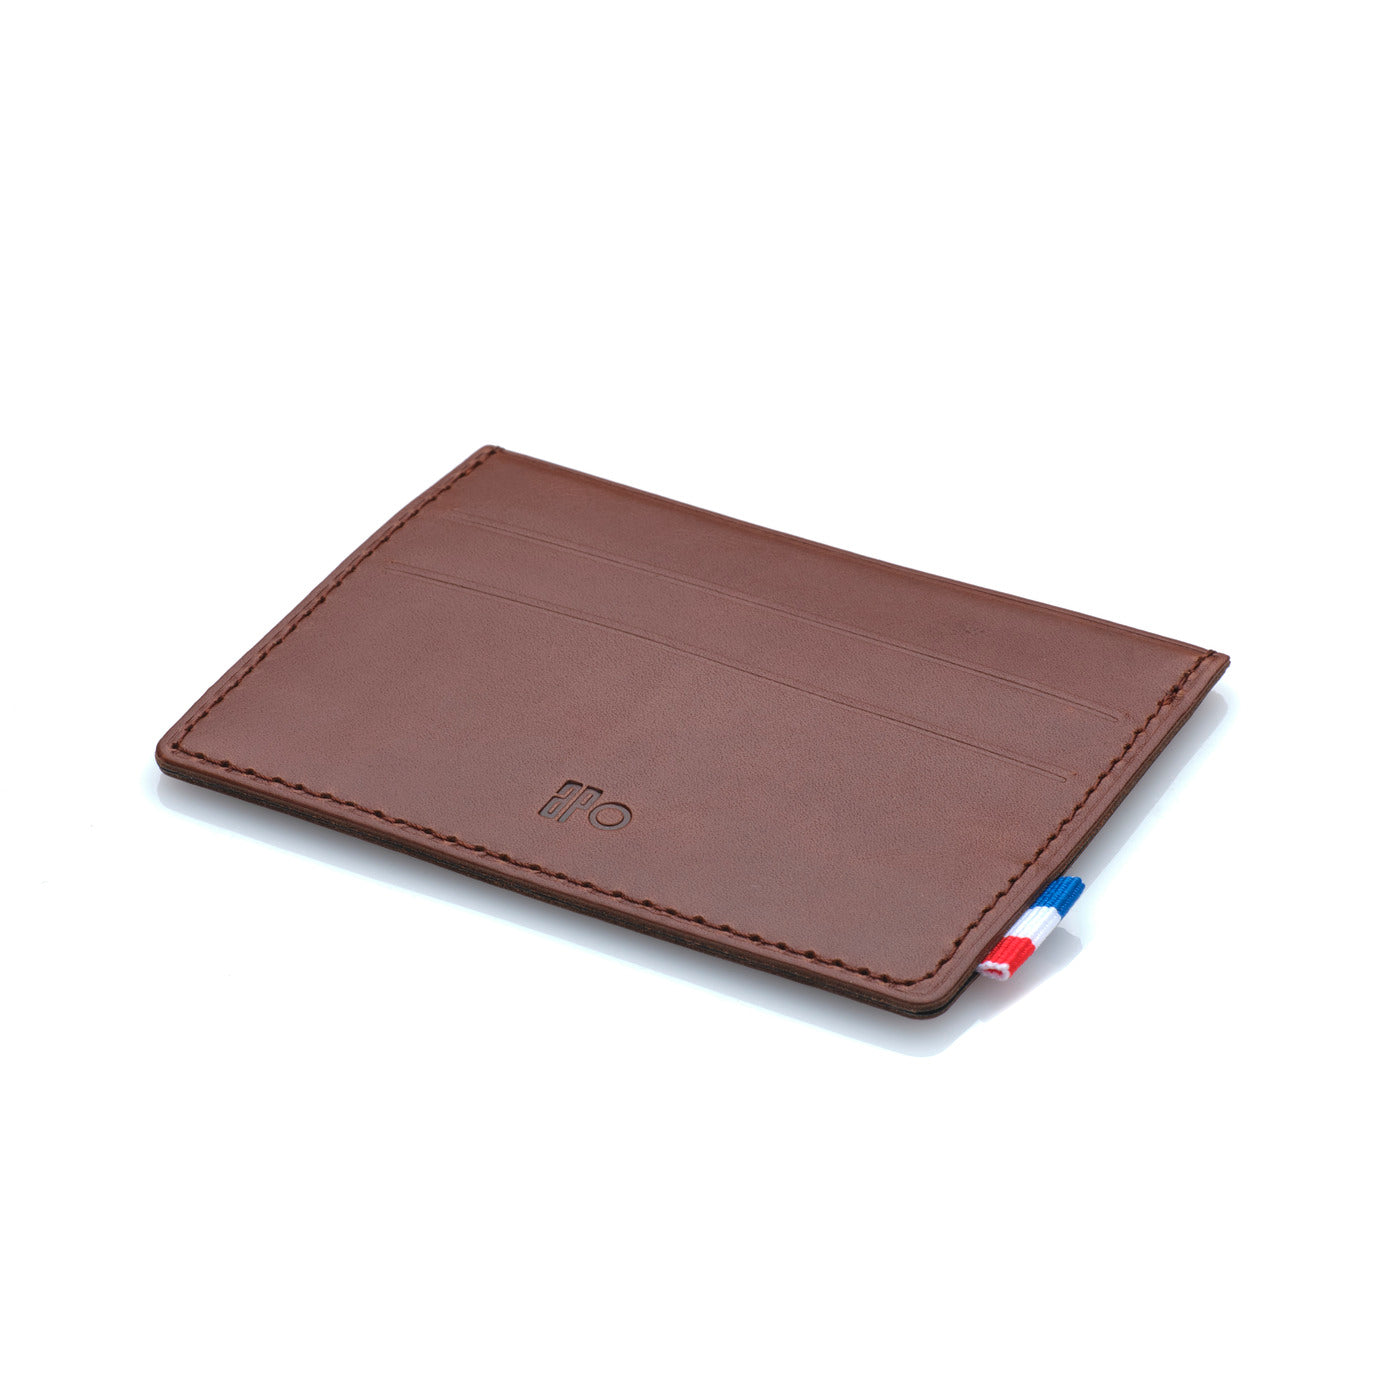 GUS - Porte-cartes horizontal en cuir patiné - Chocolat